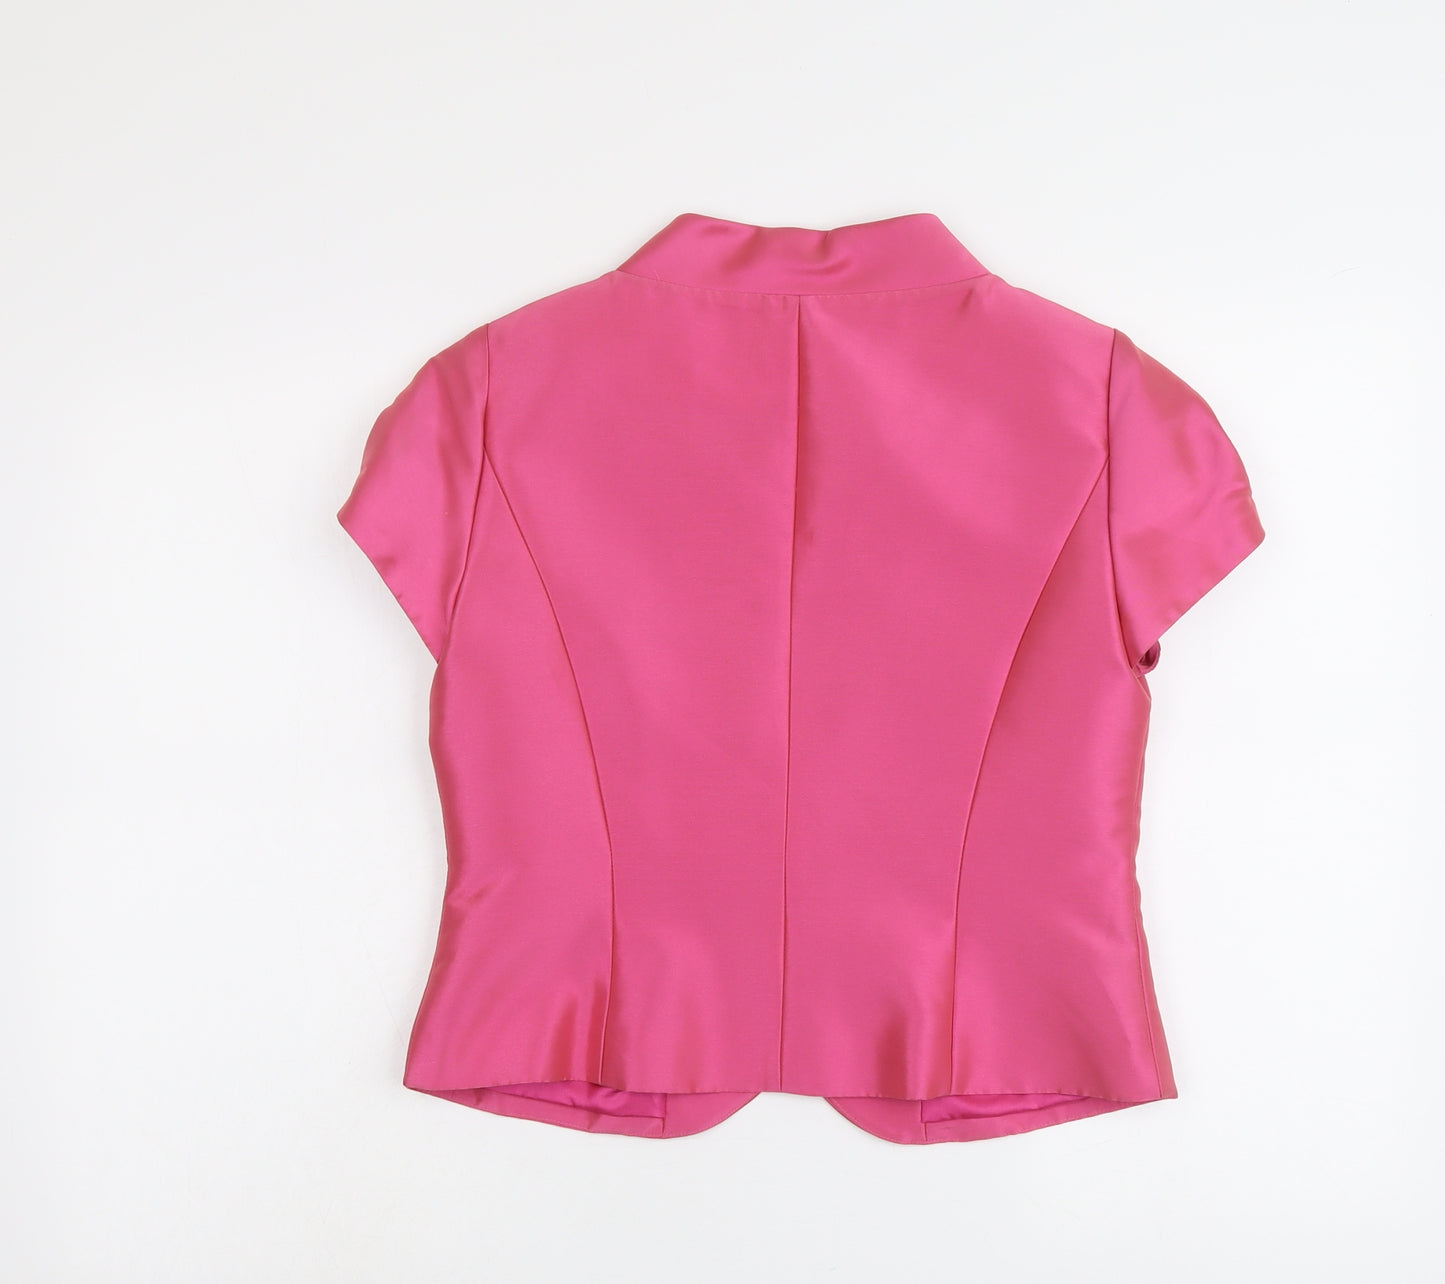 Cabotine Womens Pink Polyester Jacket Blazer Size 12